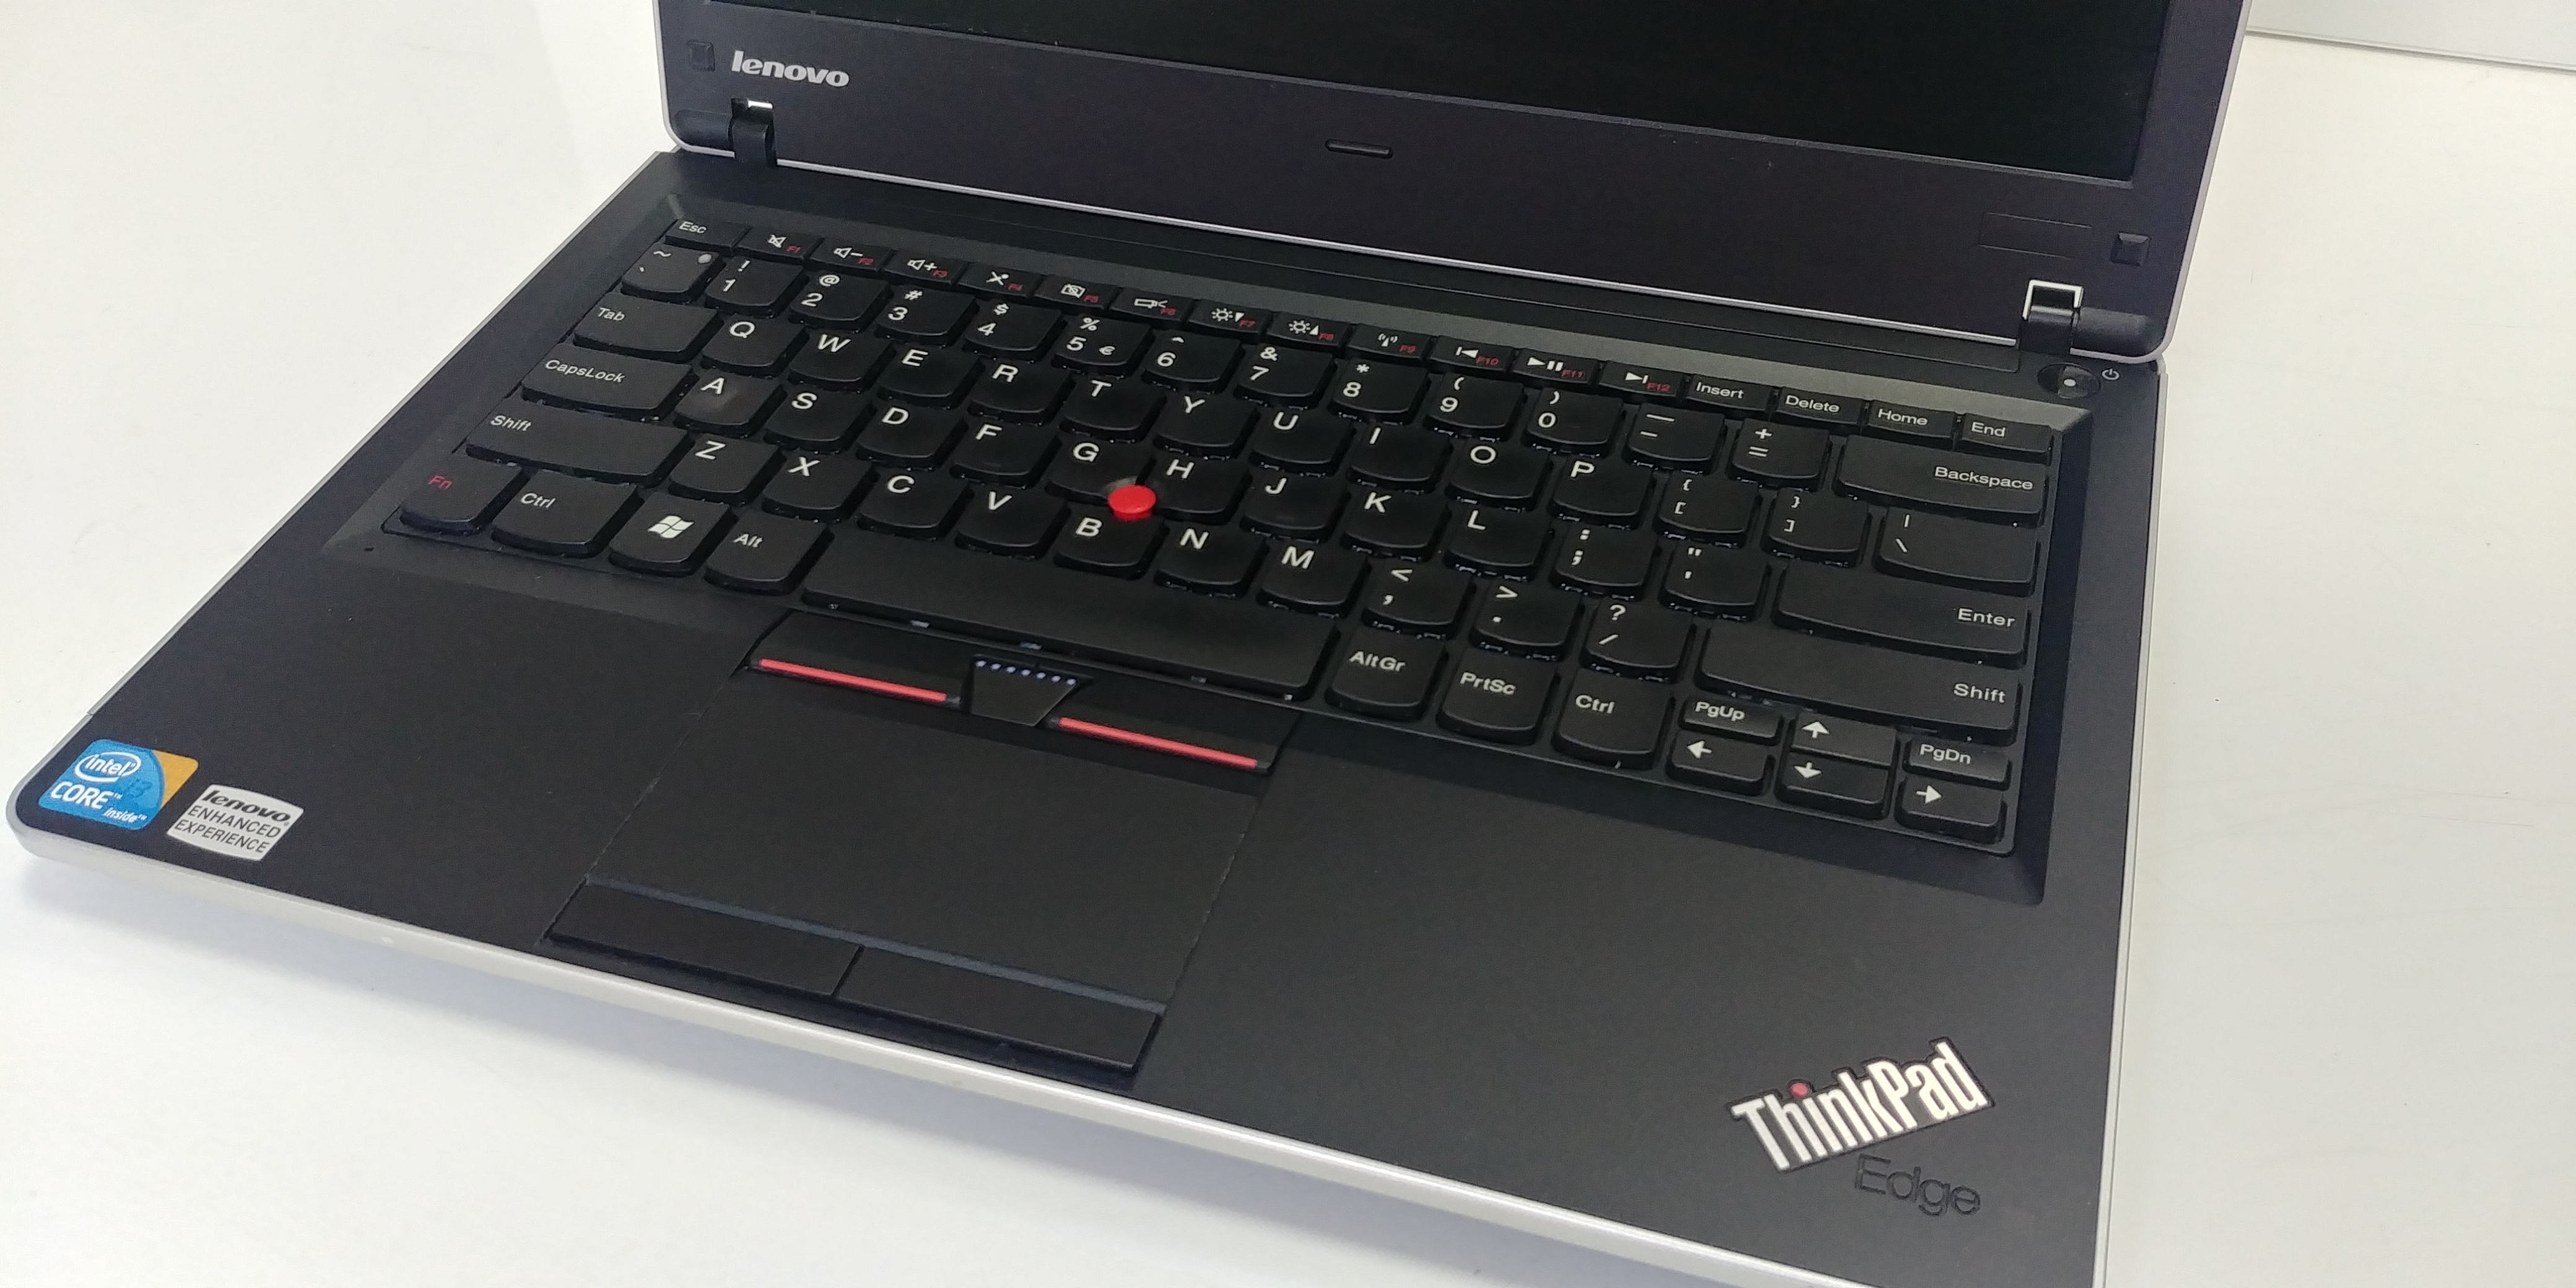 Lenovo ThinkPad EDGE 0-217 Lenovo